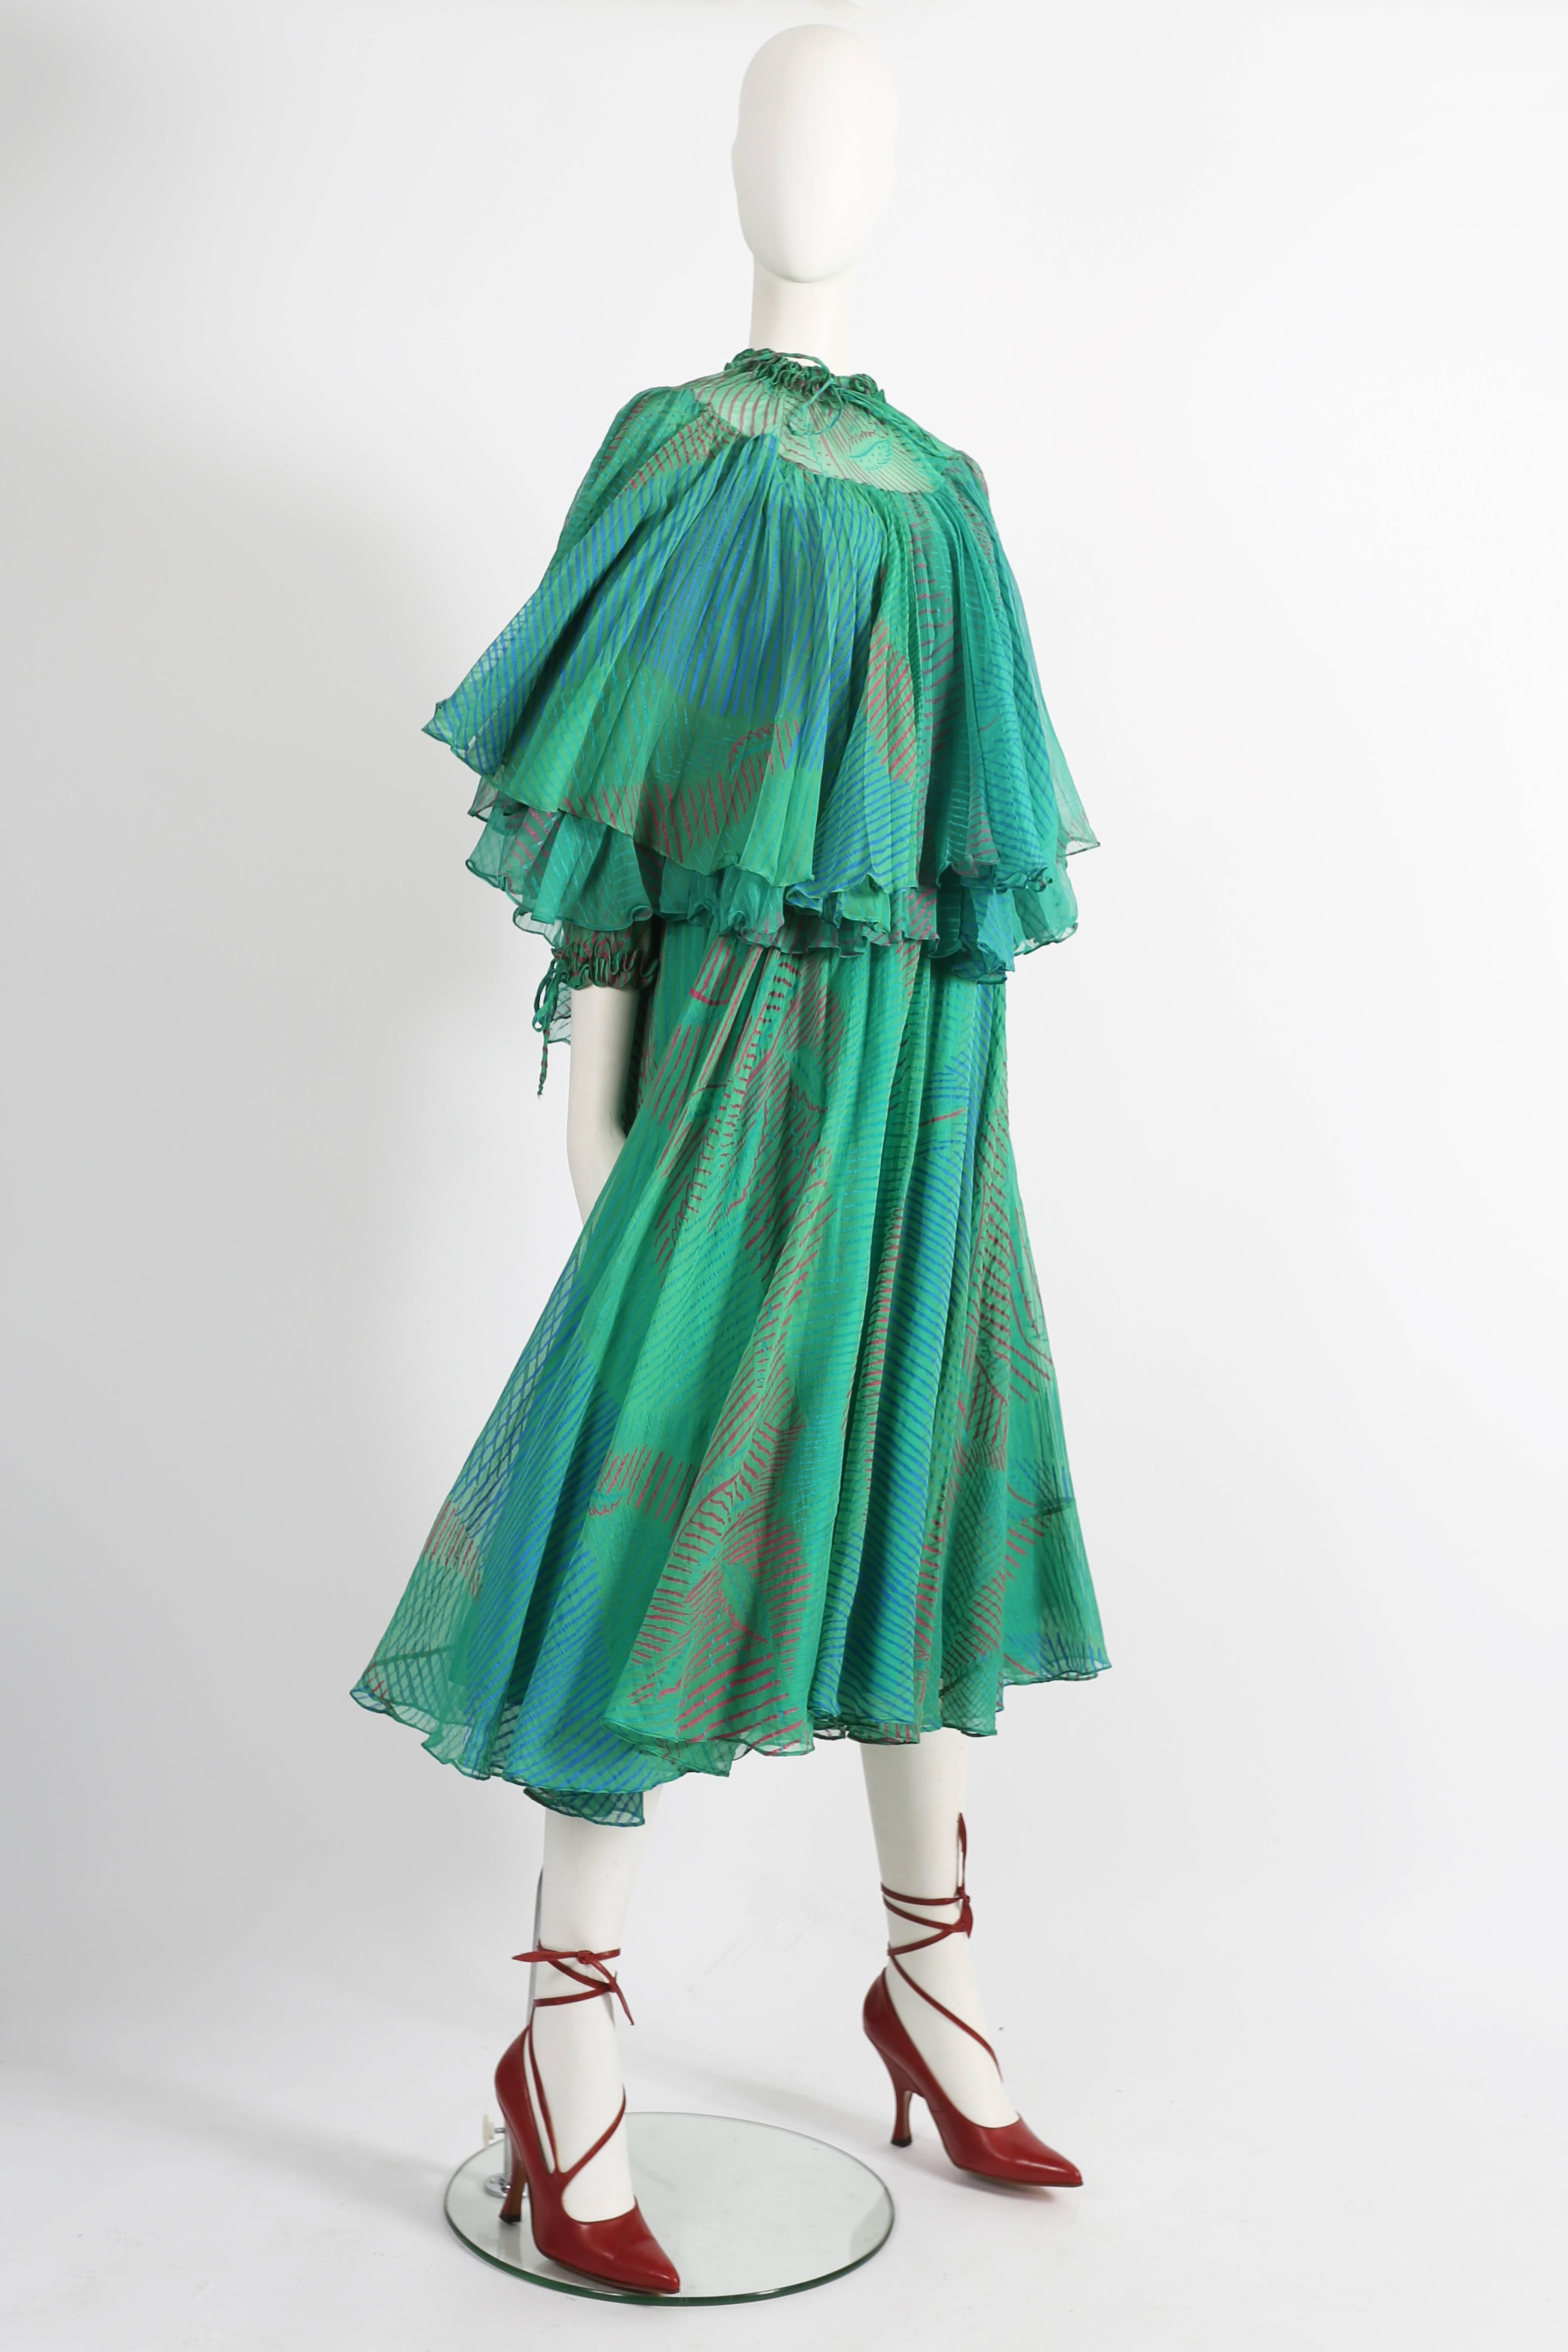 Blue Ossie Clark Celia Birtwell couture silk chiffon screen-print dress, circa 1976